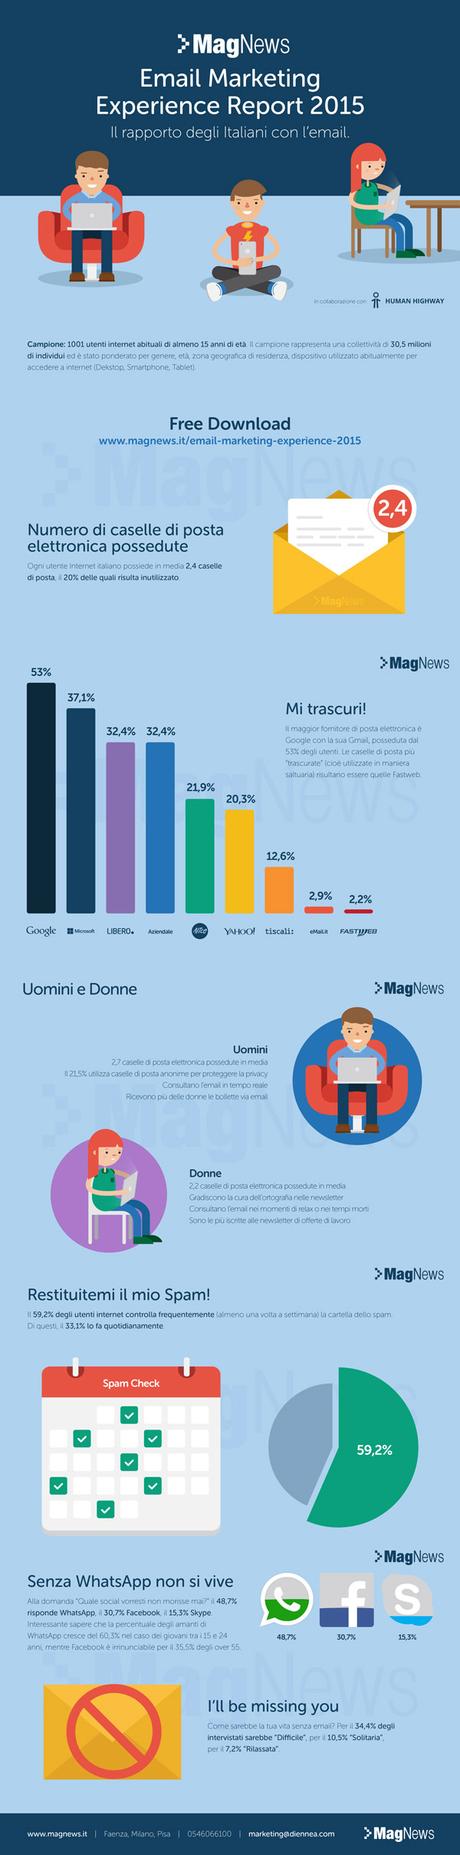 MagNews_email-infografica-2015